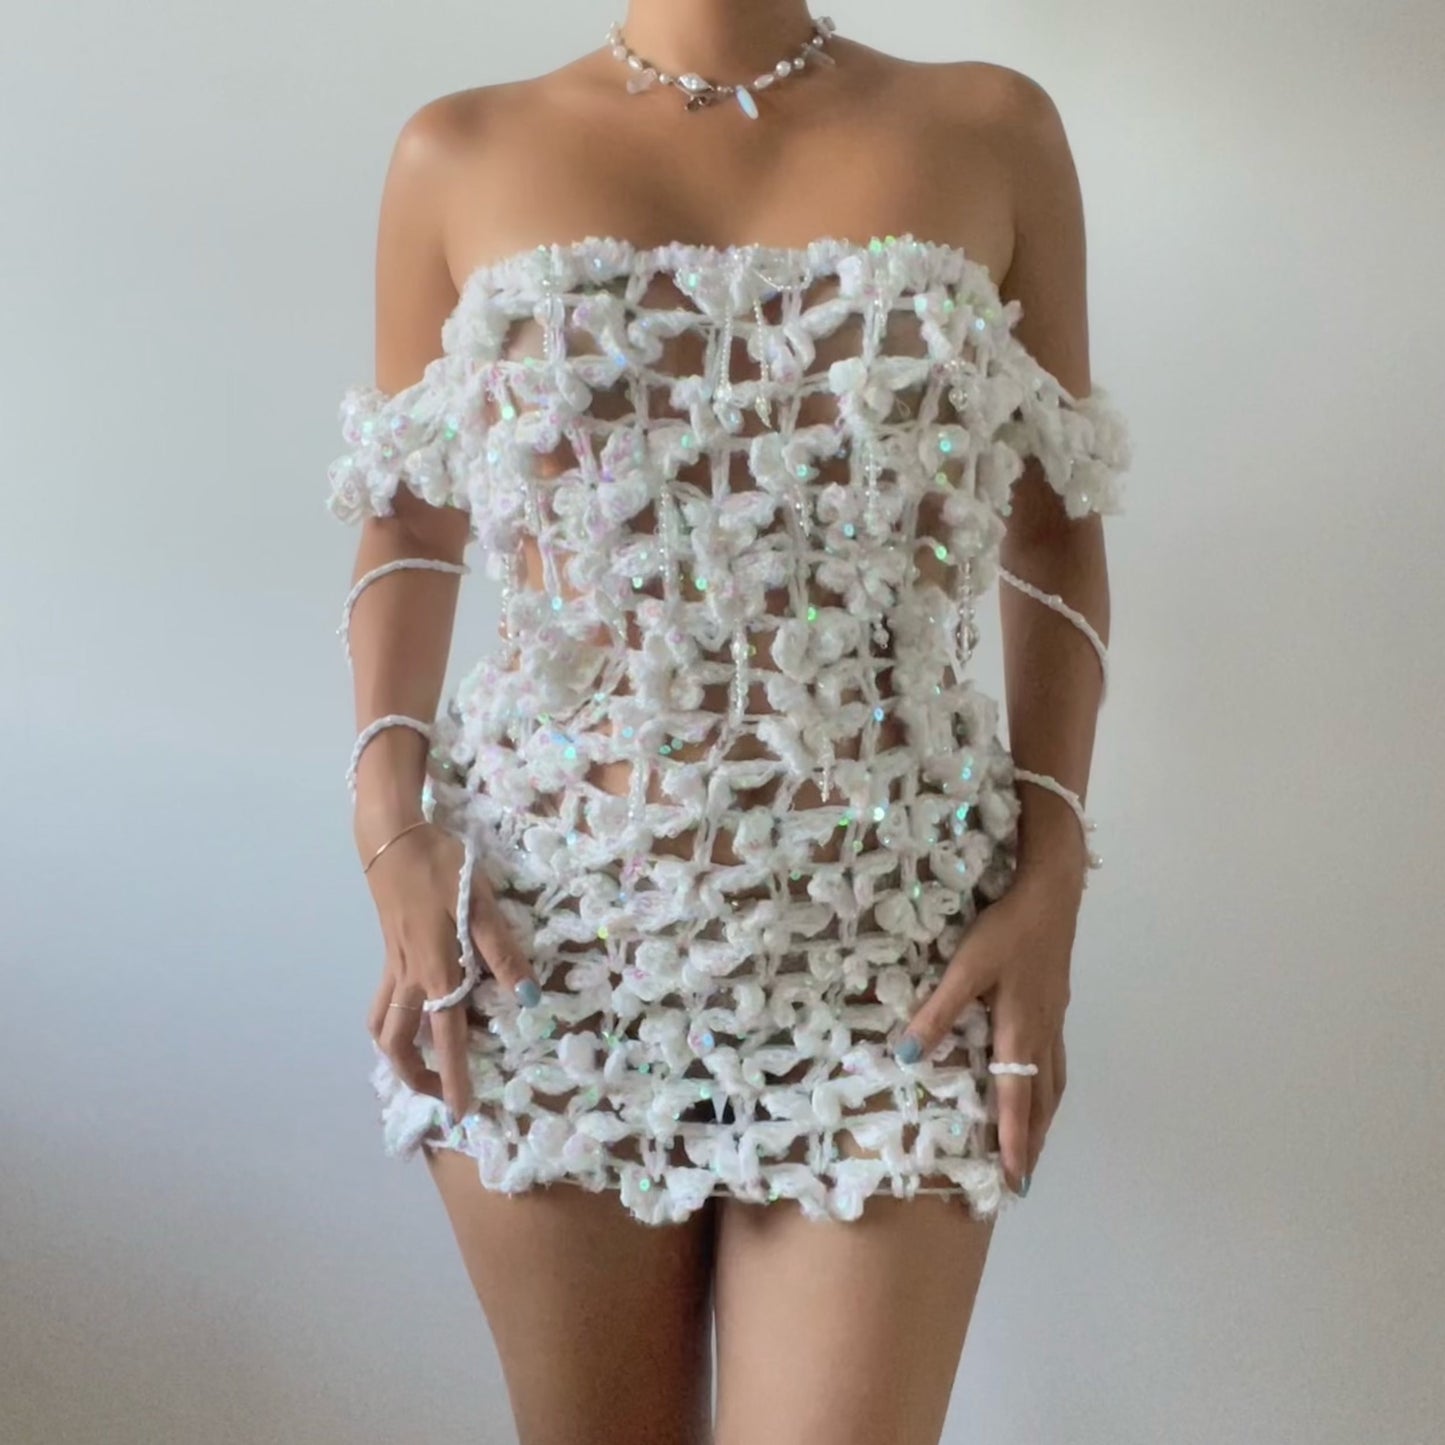 Butterfly dress - White